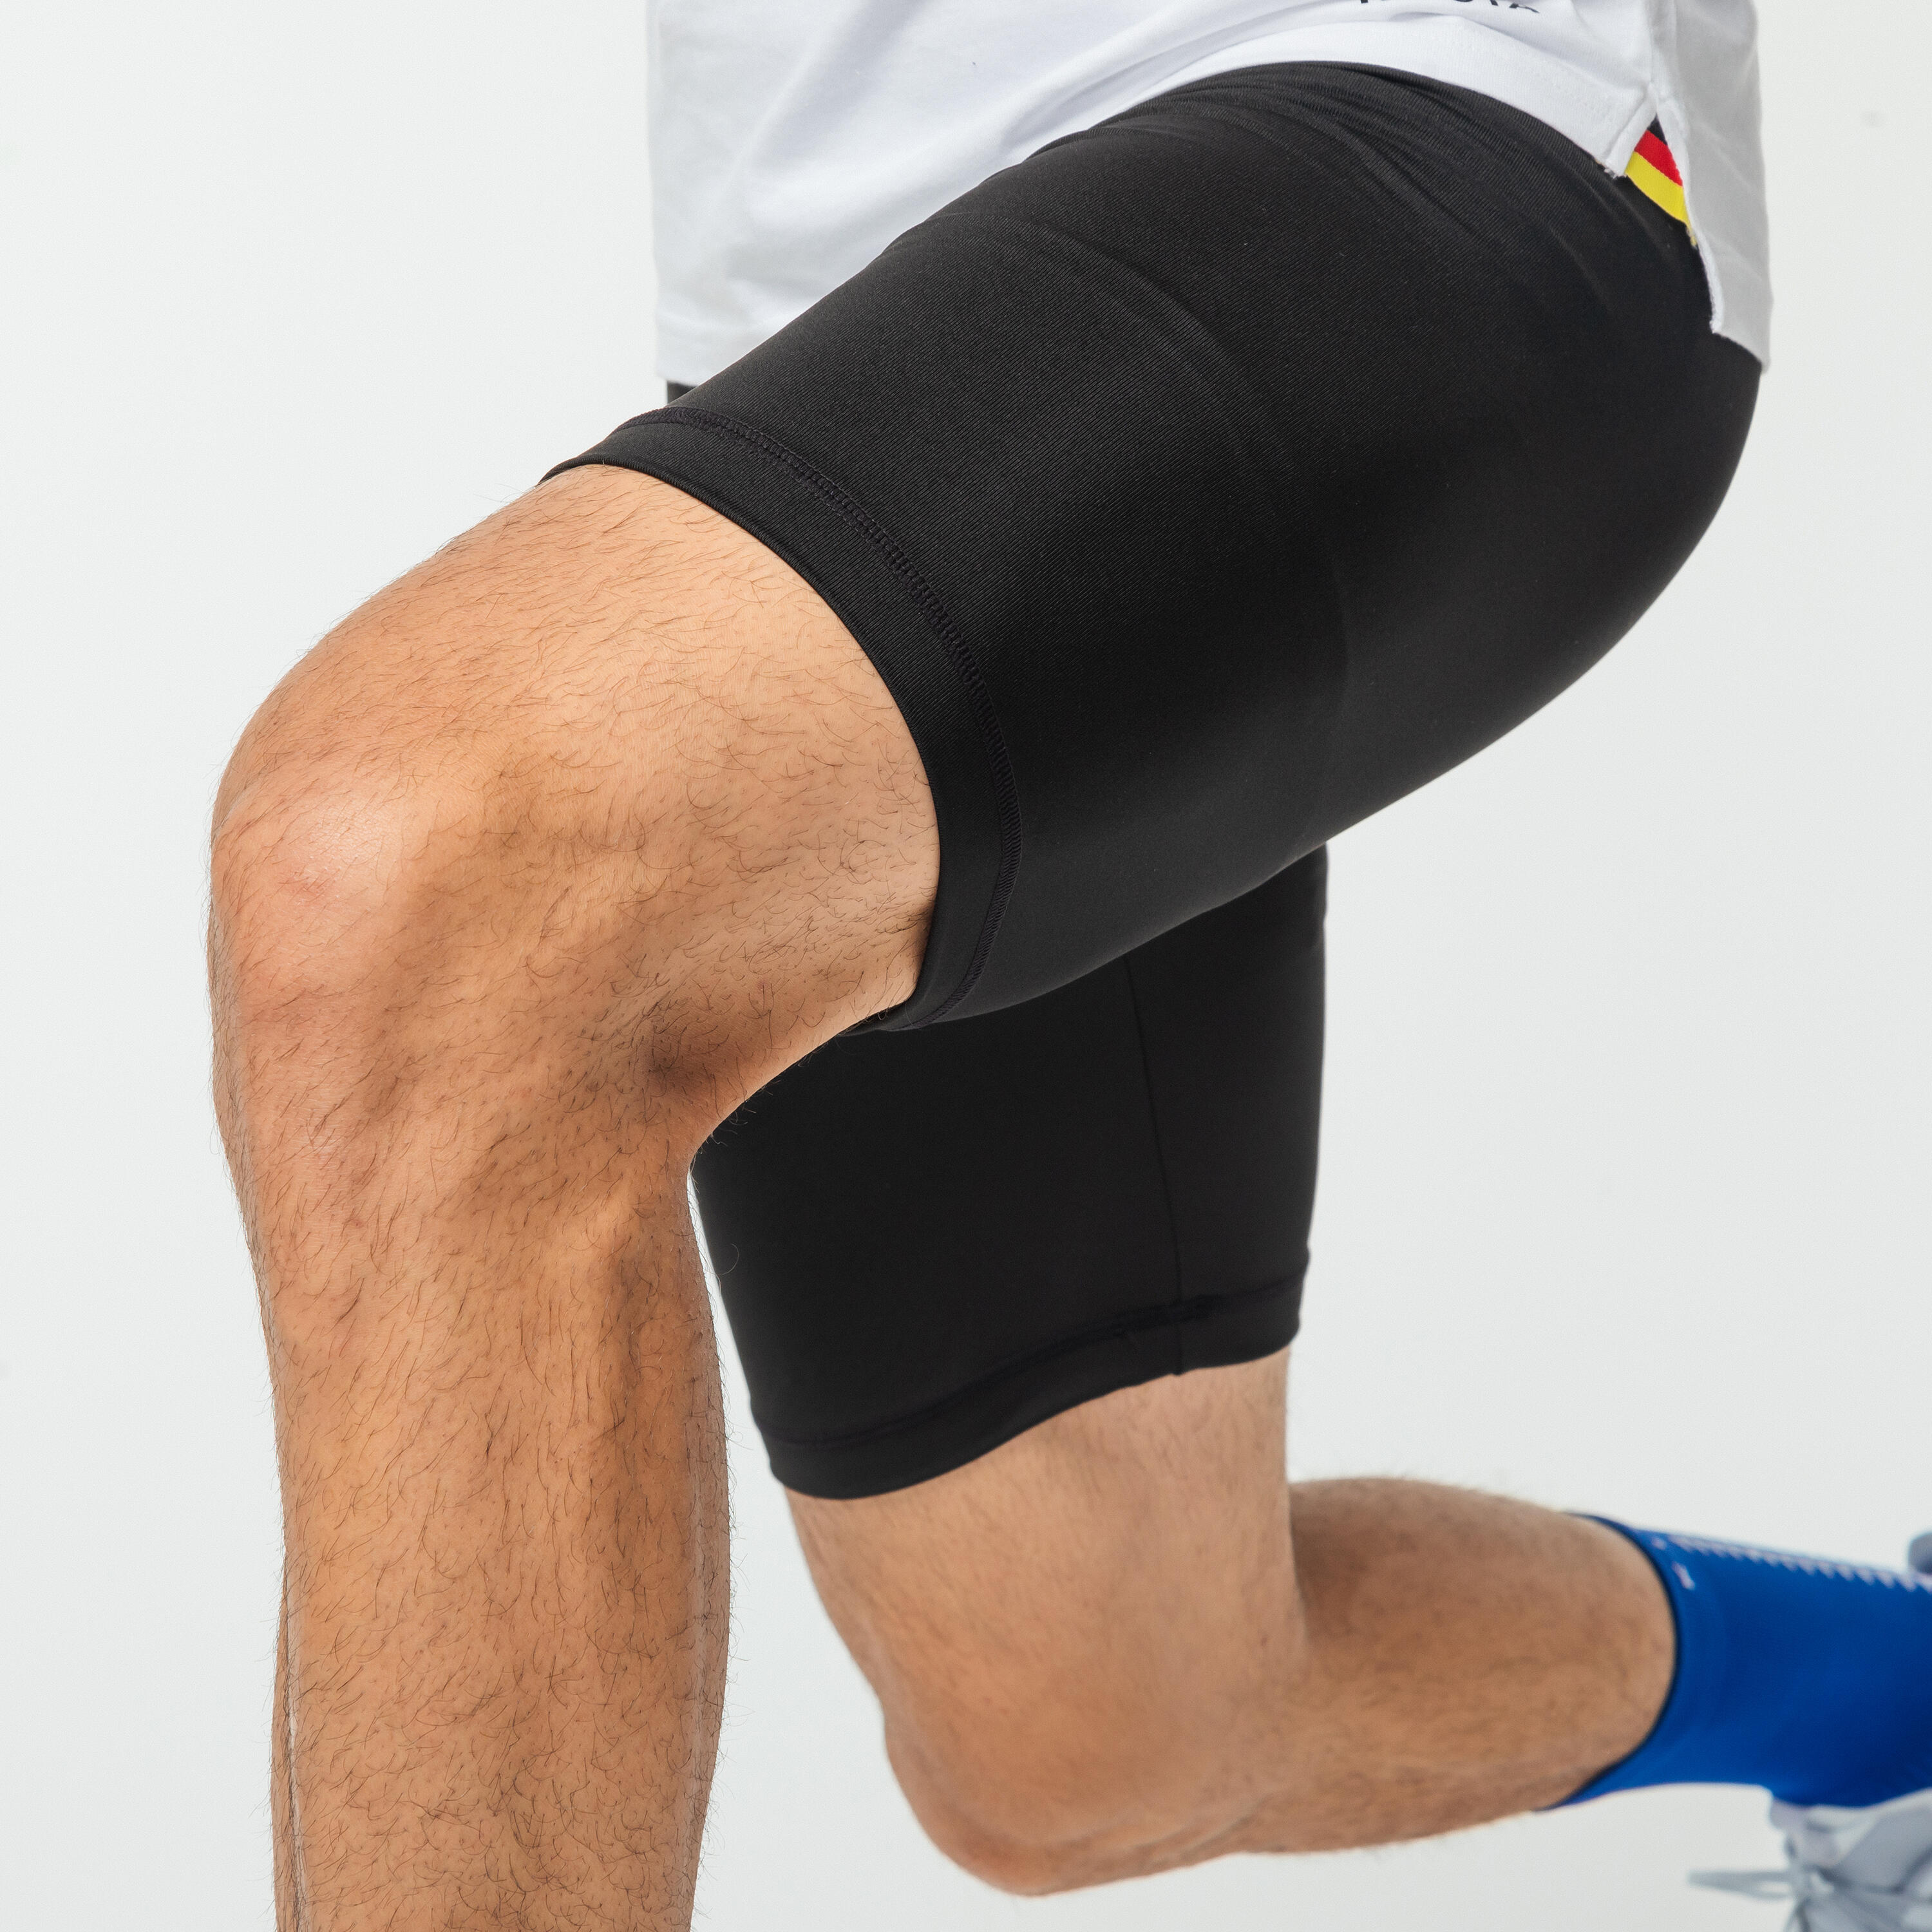 Kipsta Decathlon Football Undershorts Keepcomfort - ShopStyle Activewear  Shorts